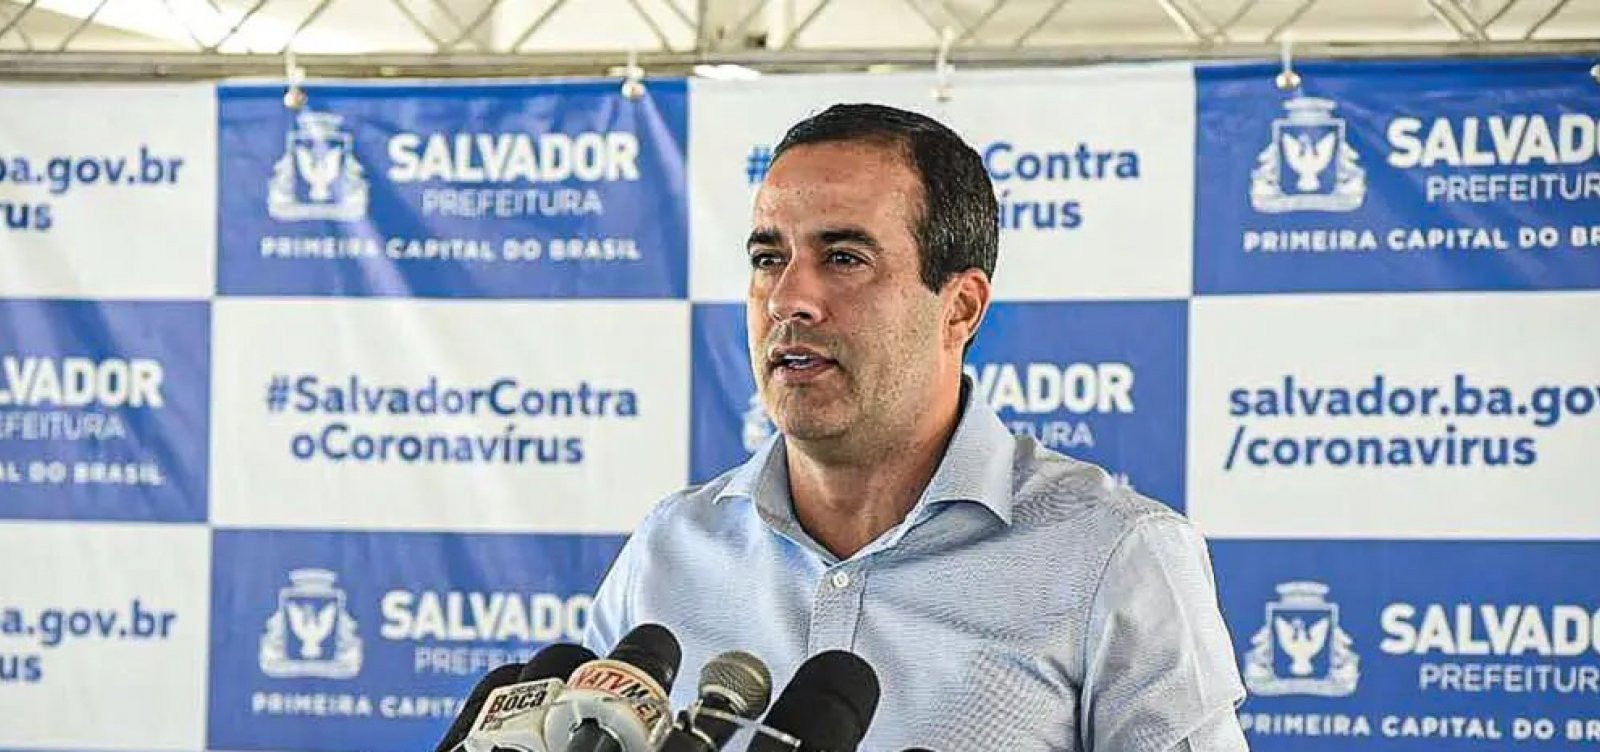 Prefeito vai a Brasília por última tentativa de subsídio ao transporte público, diz Semob 